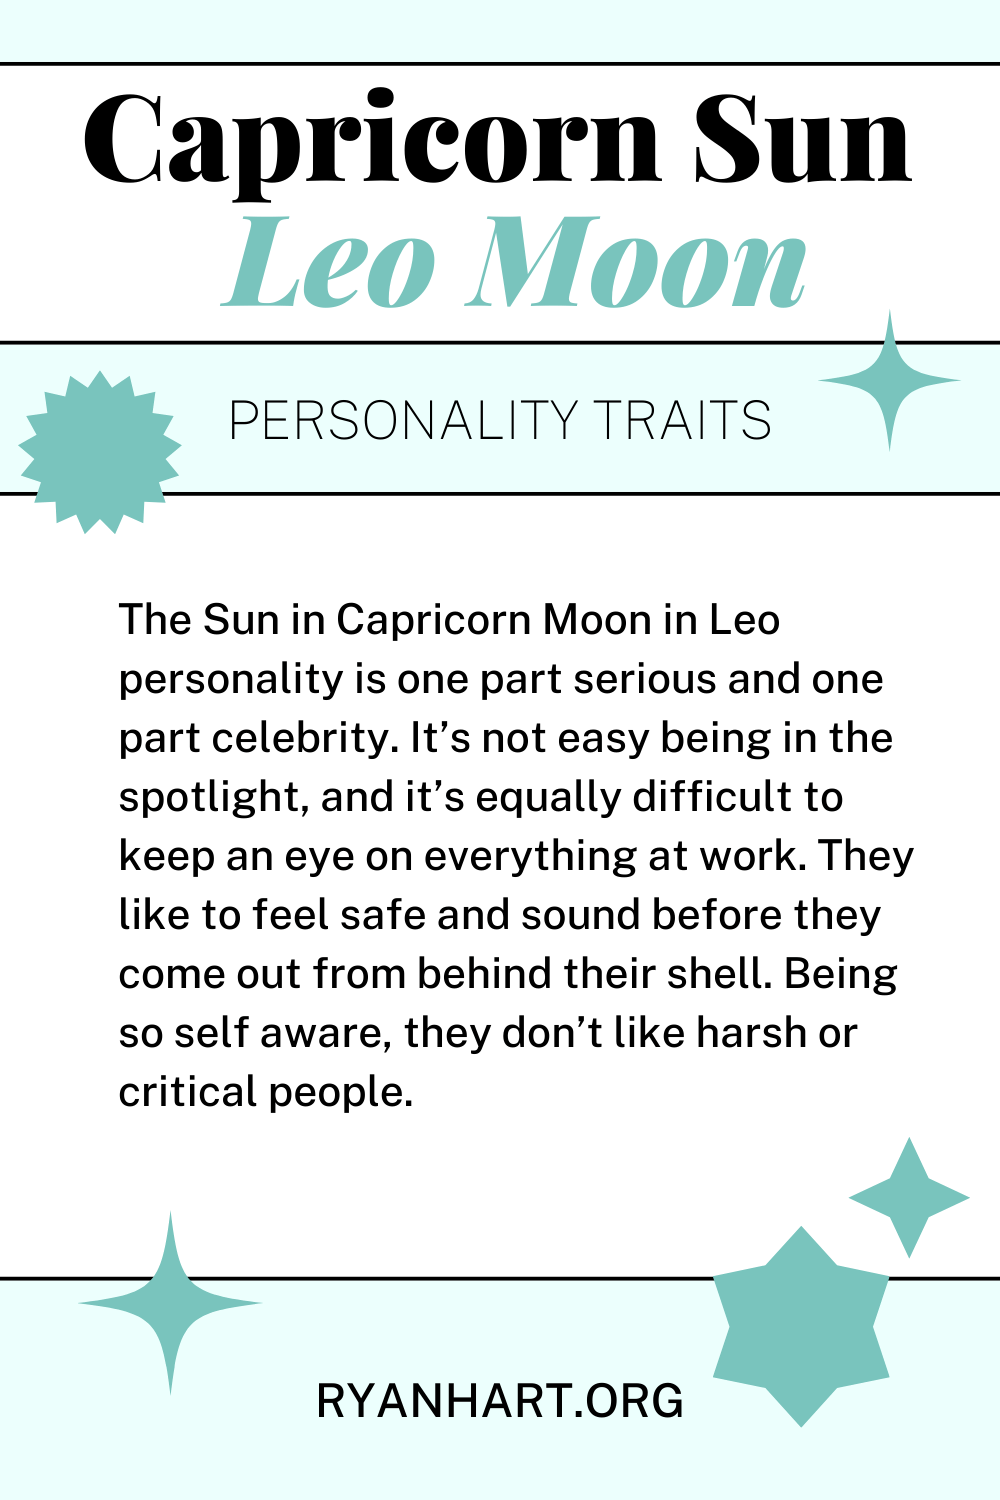 Capricorn Sun Leo Moon Description